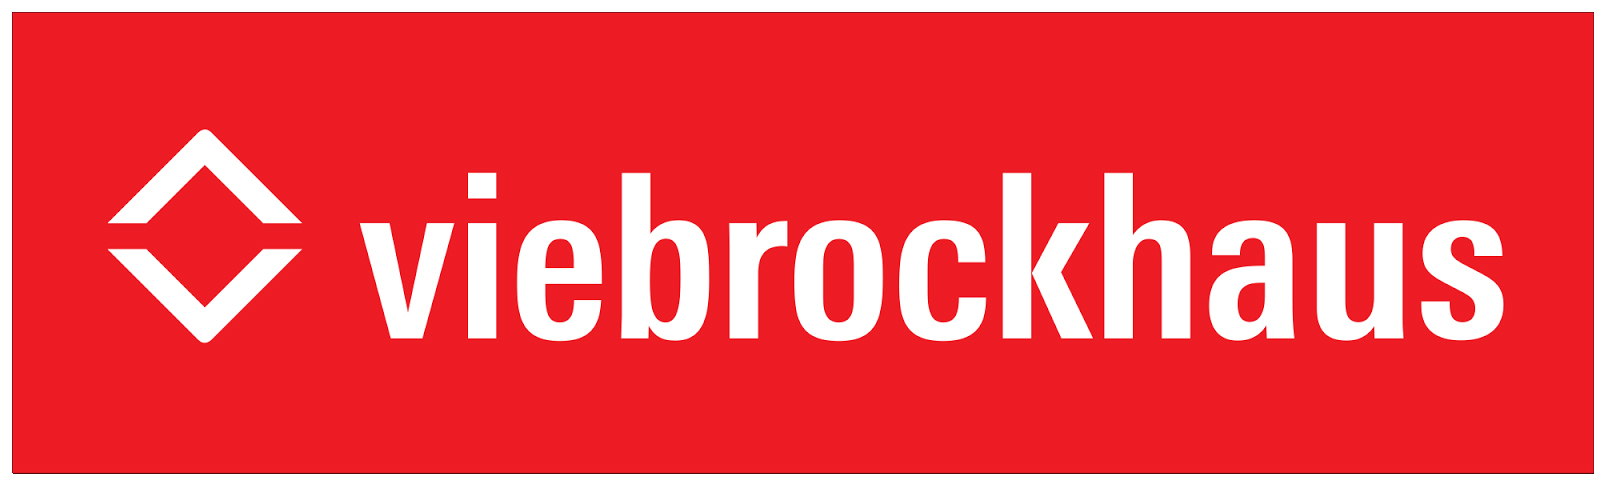 images/Logo_viebrockhaus.jpg